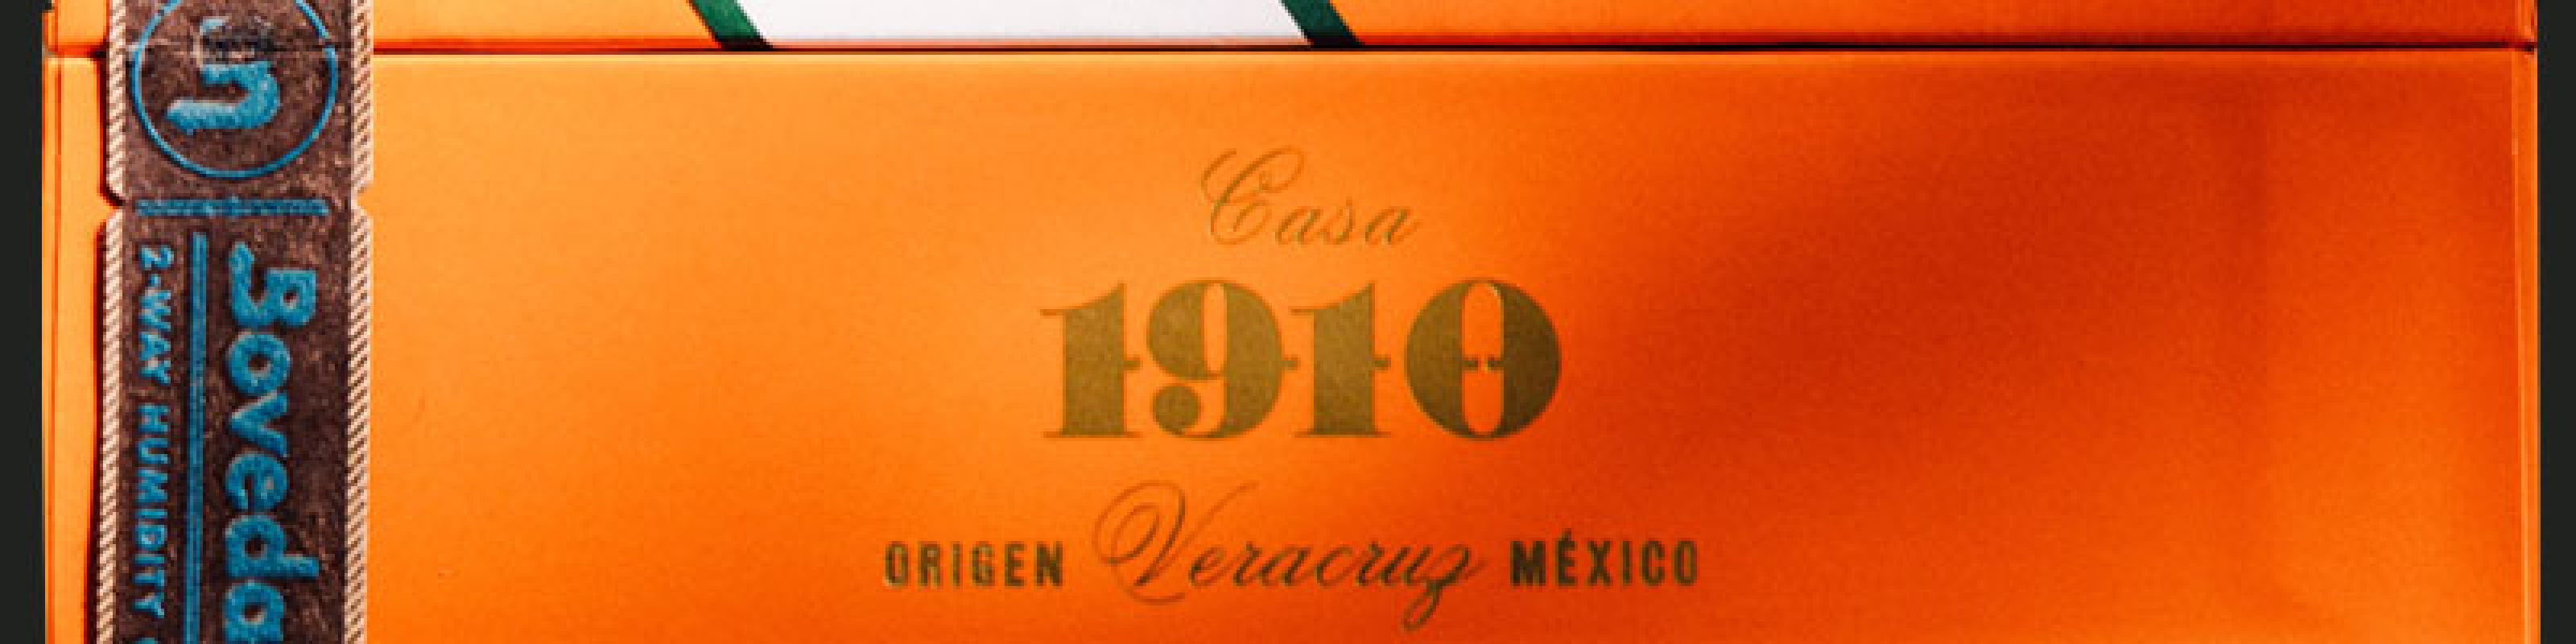 Casa 1910 startpreis